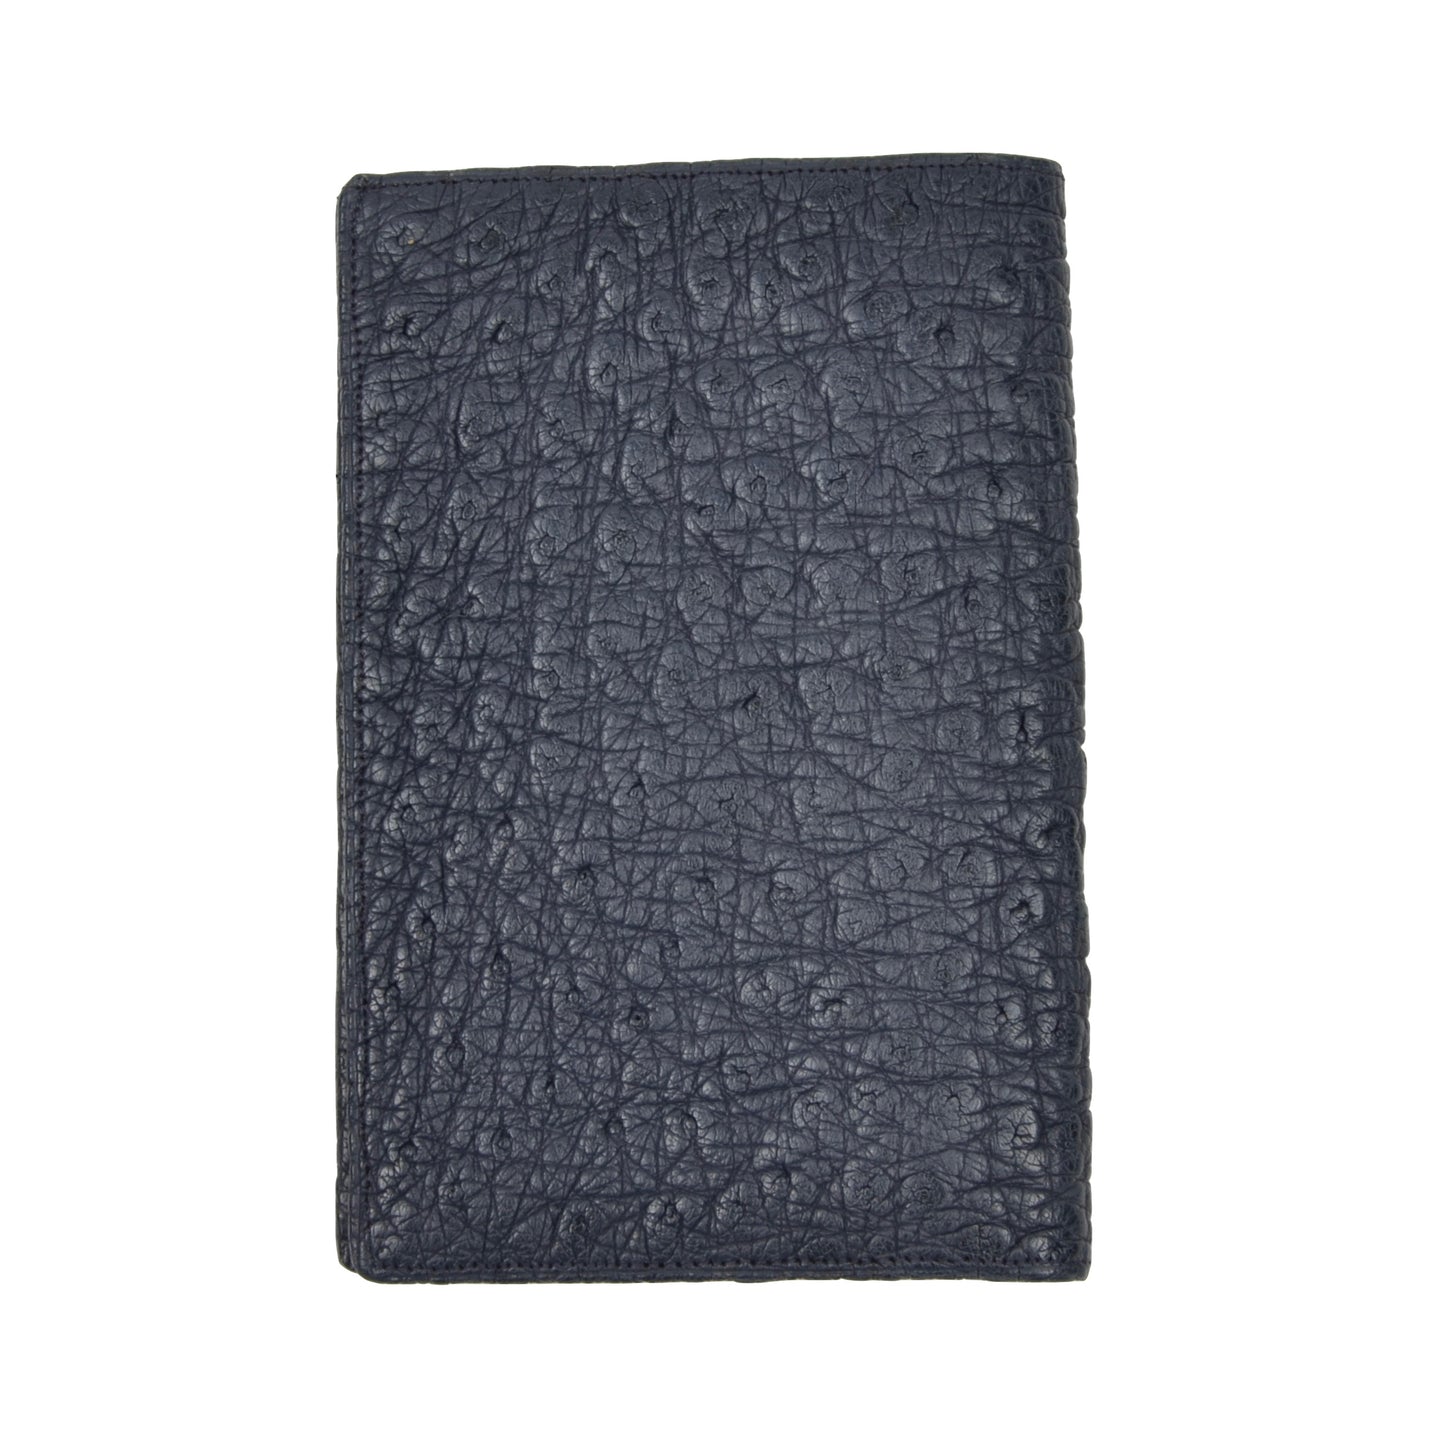 Righini Venezia Ostrich Leather Wallet/Billfold - Dark Blue